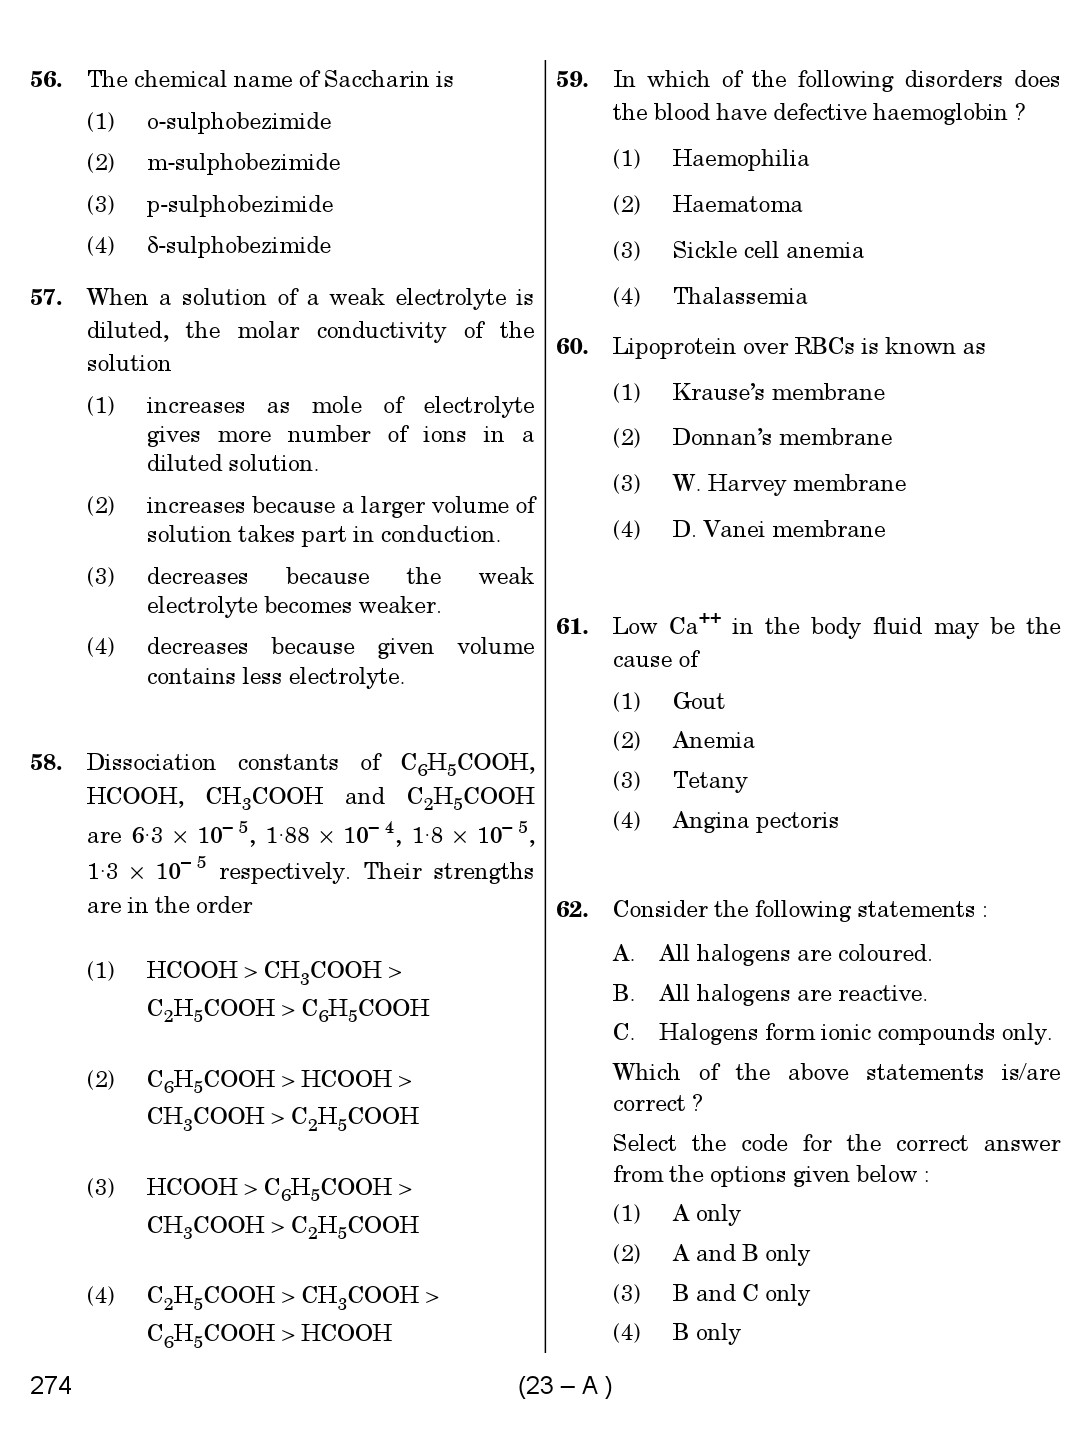 Karnataka PSC Science Teacher Exam Sample Question Paper Subject code 274 23